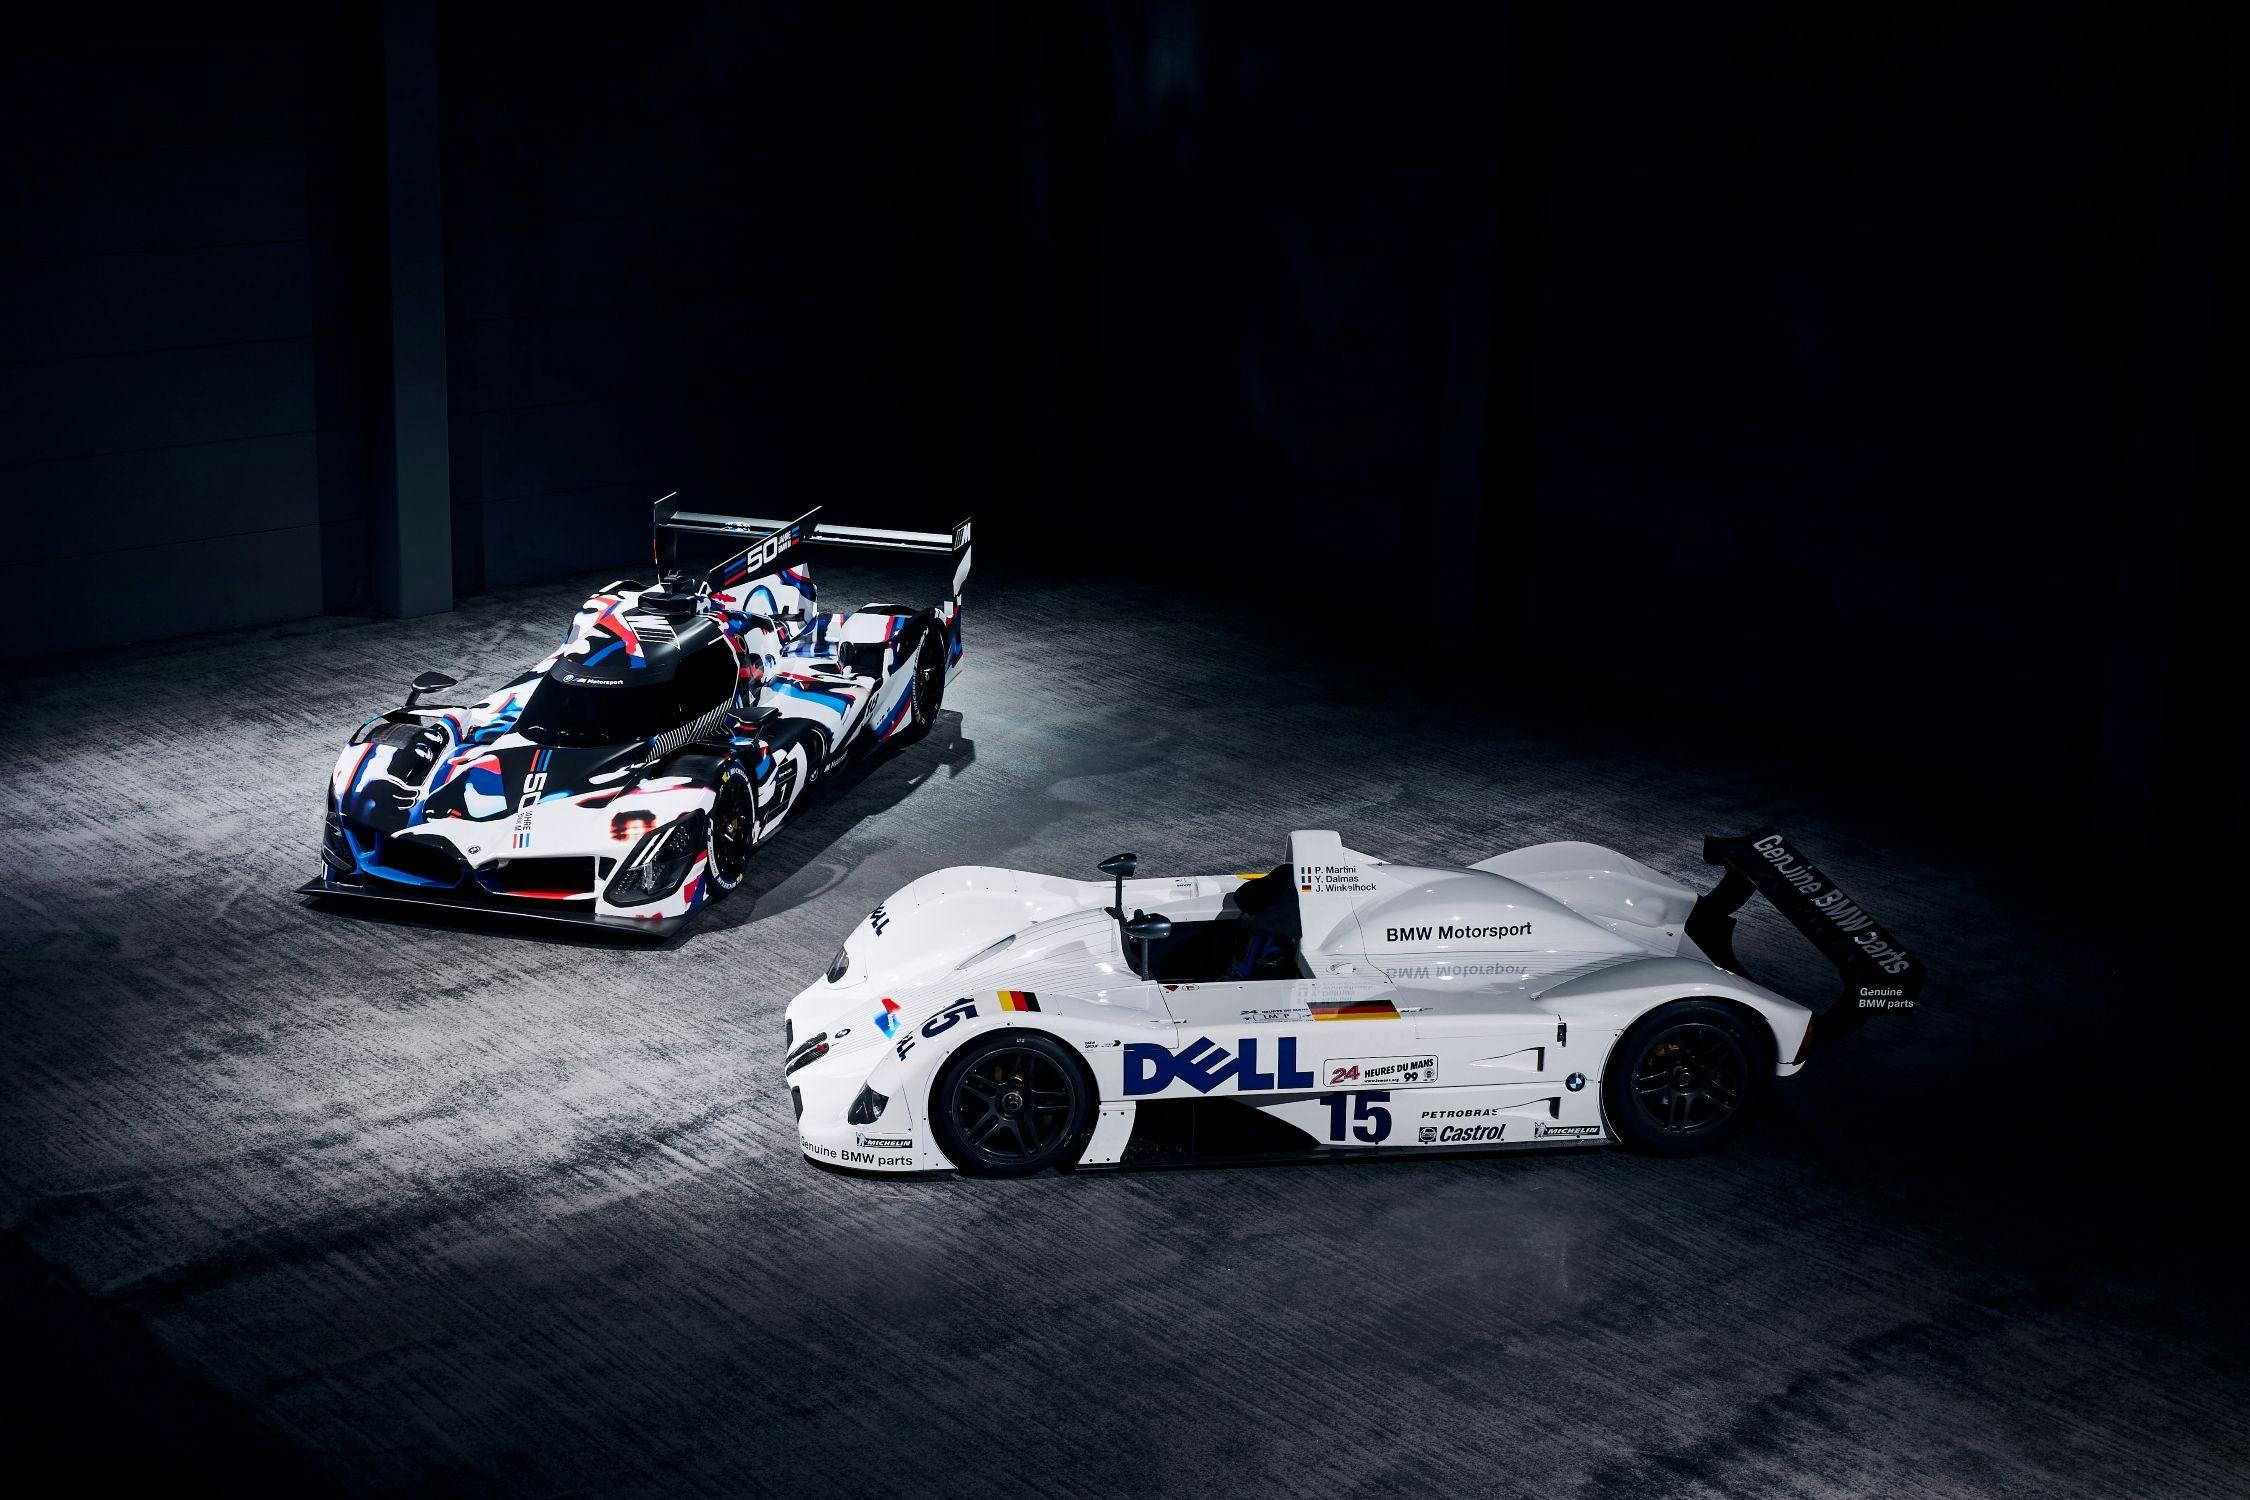 BMW M Le Mans Hybrid V8 Car